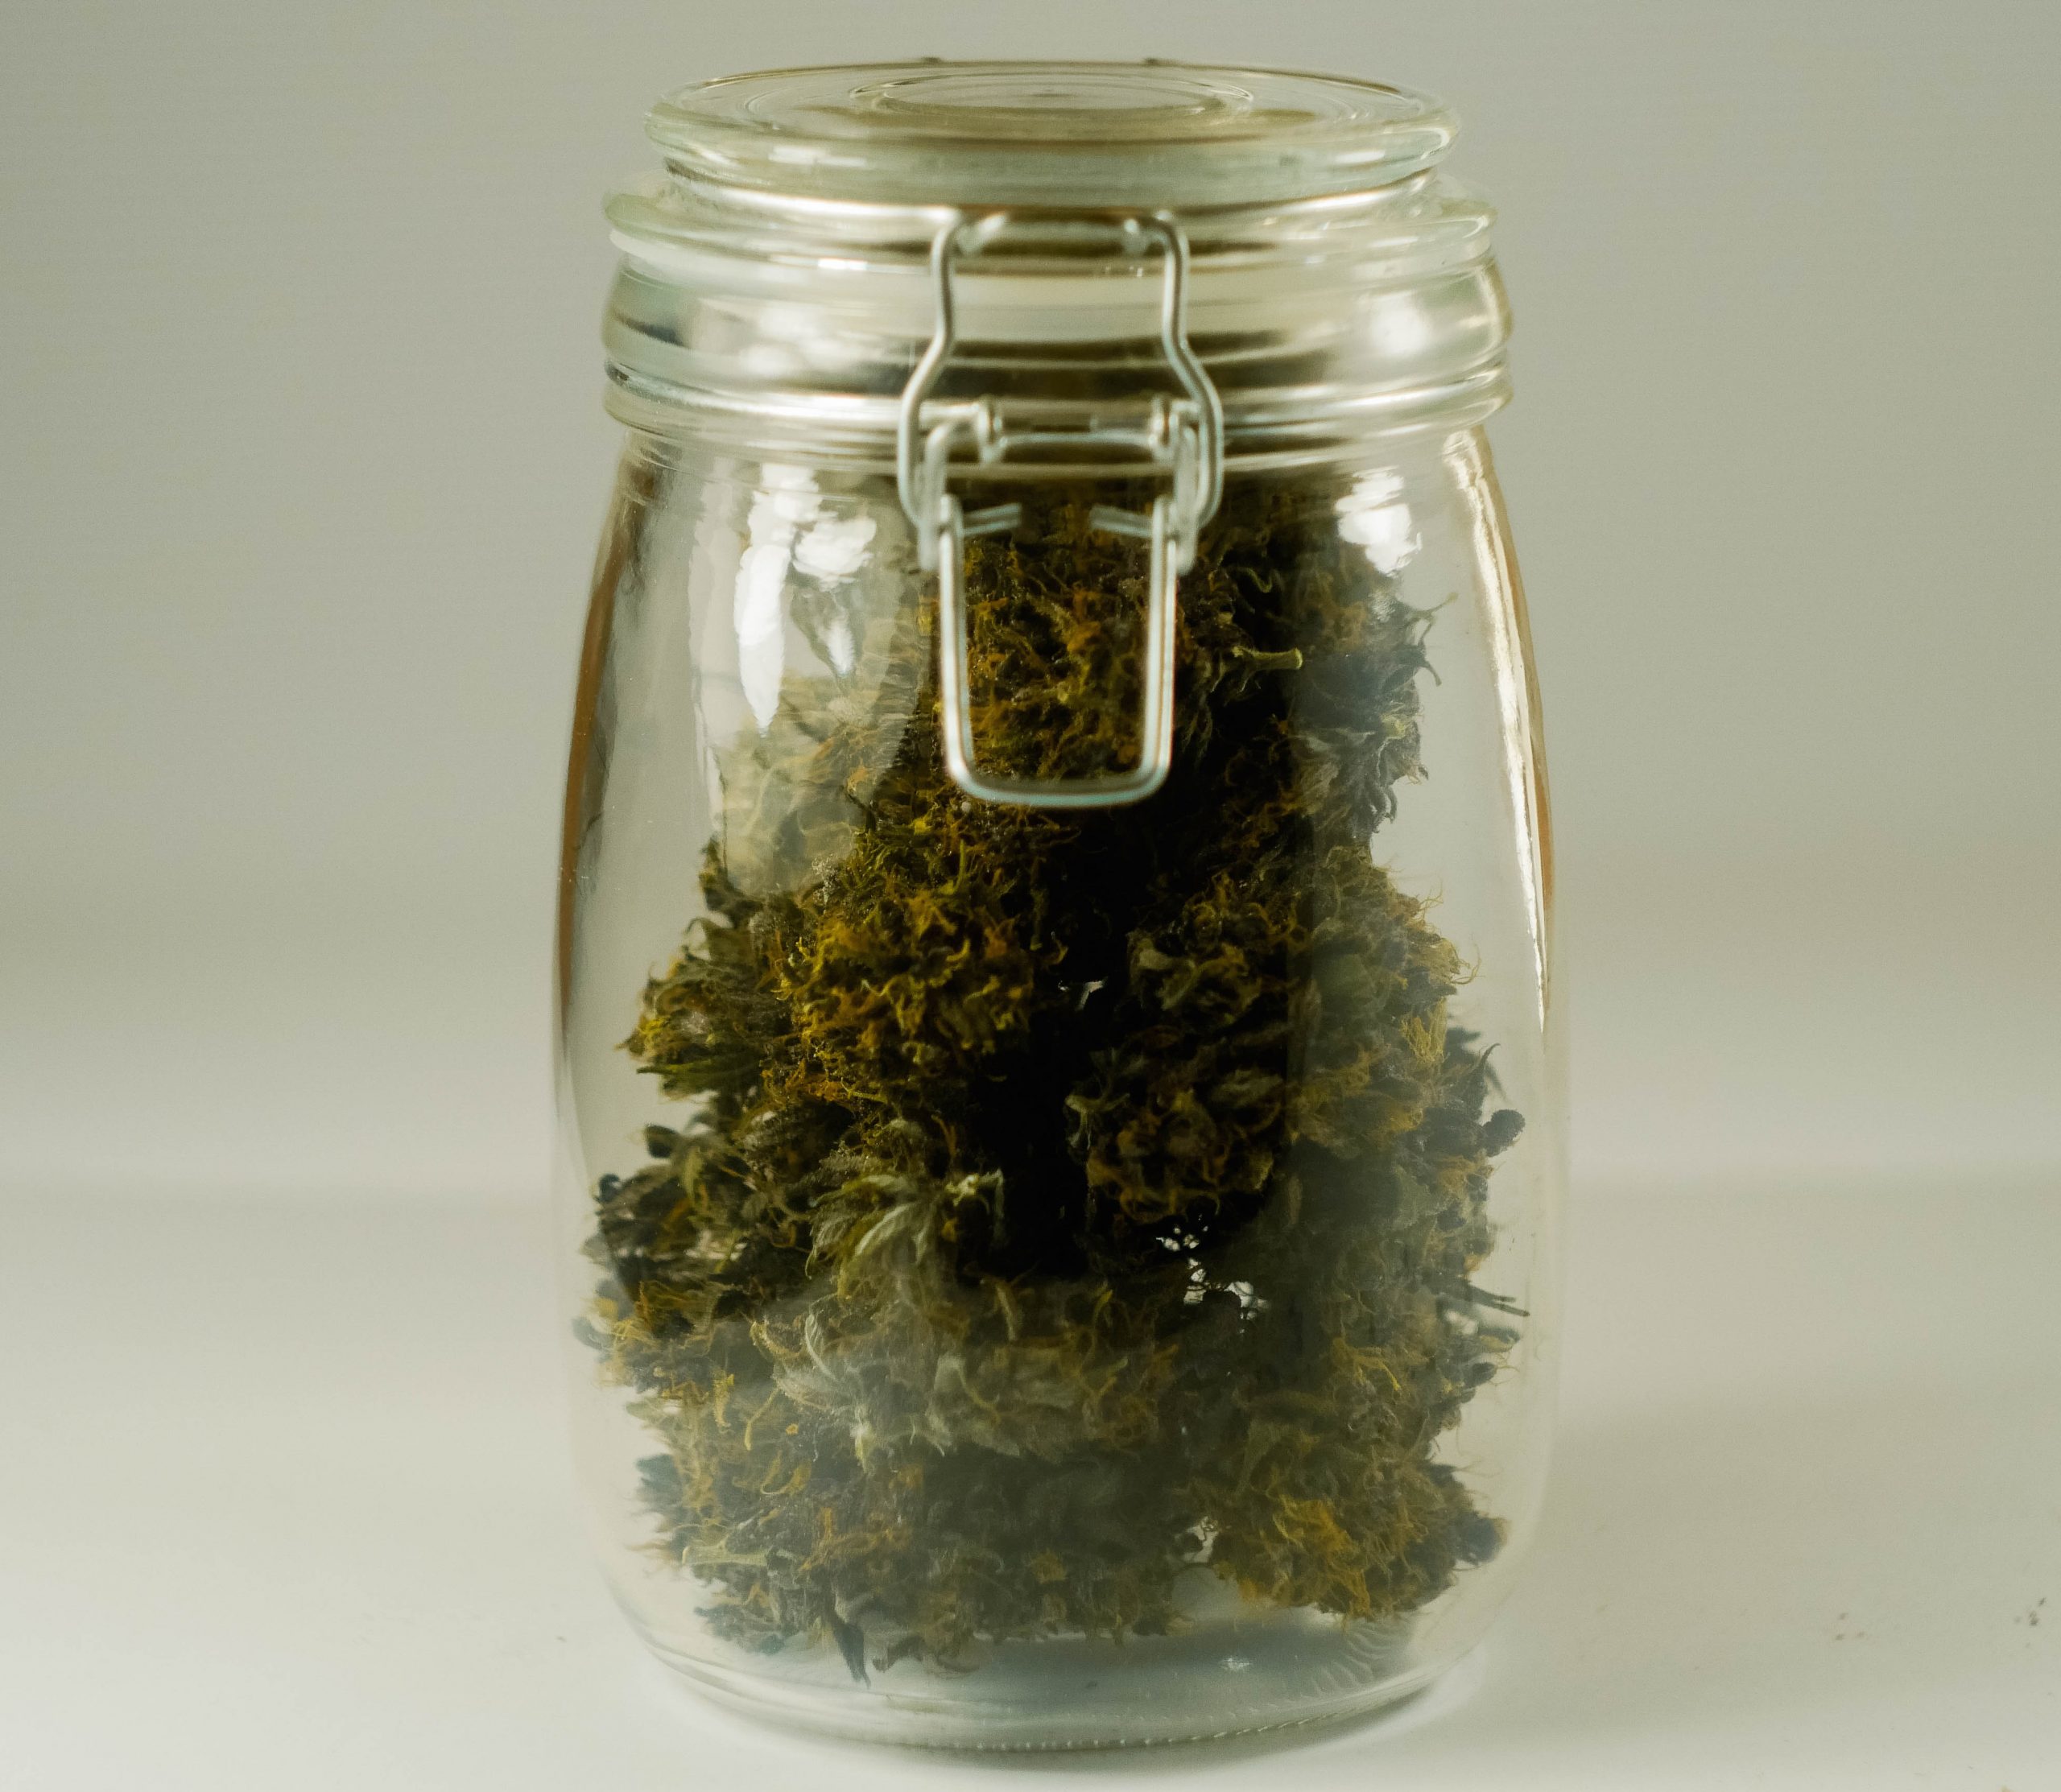 glass jar with marijuana buds